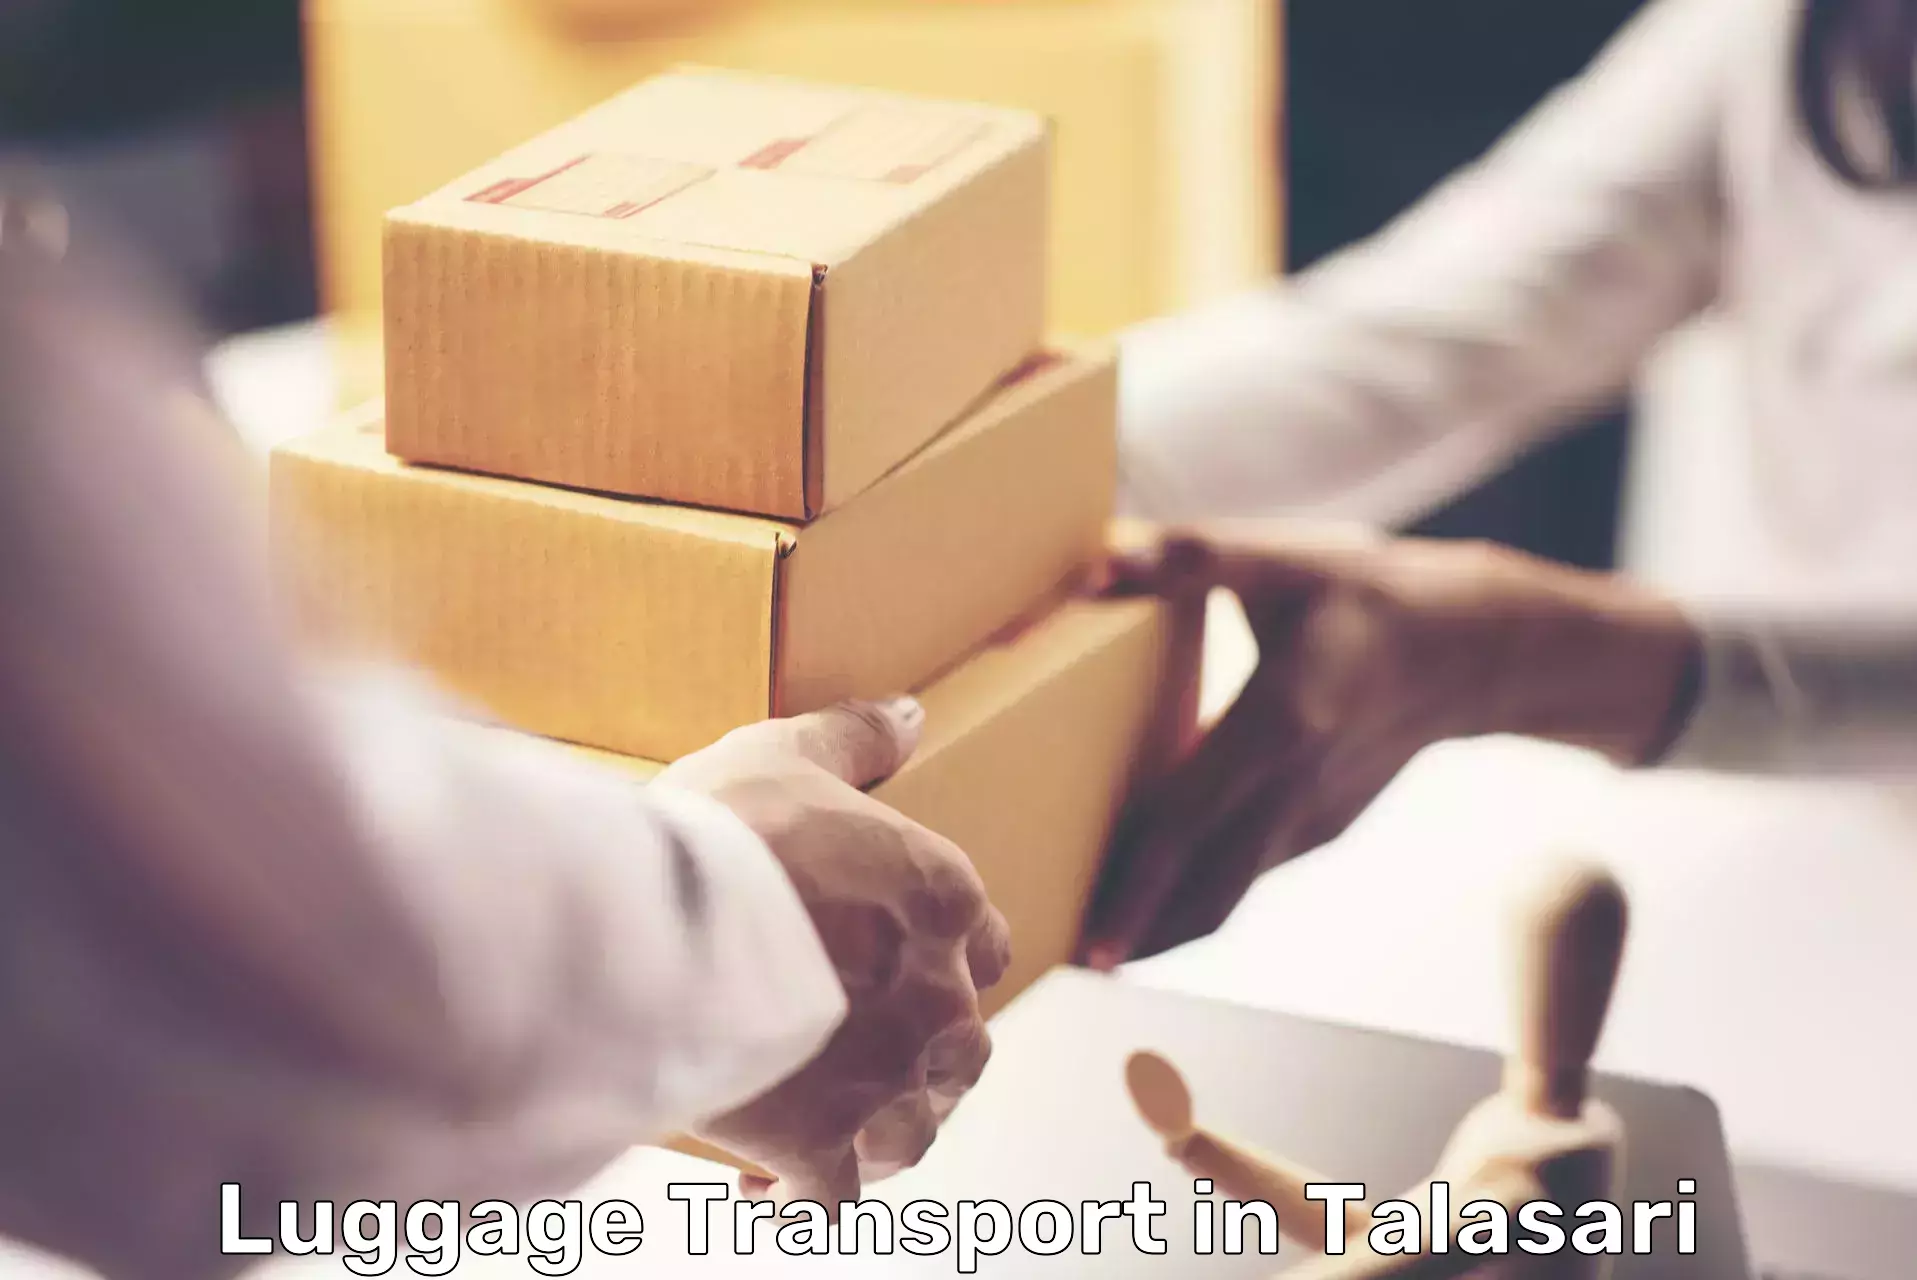 Luggage delivery optimization in Talasari